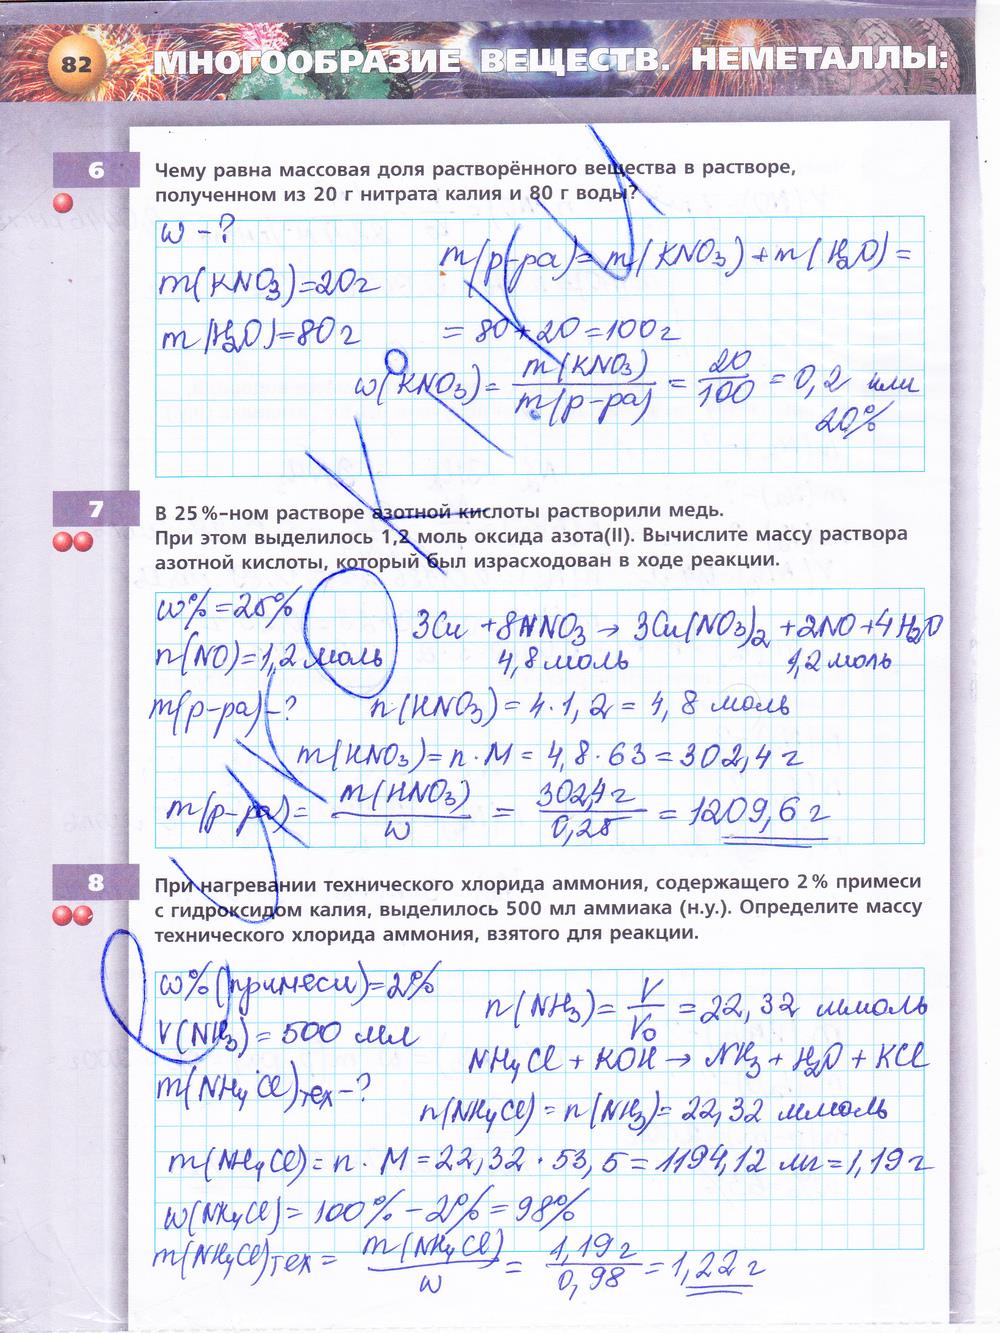 гдз 9 класс тетрадь-тренажёр страница 82 химия Гара